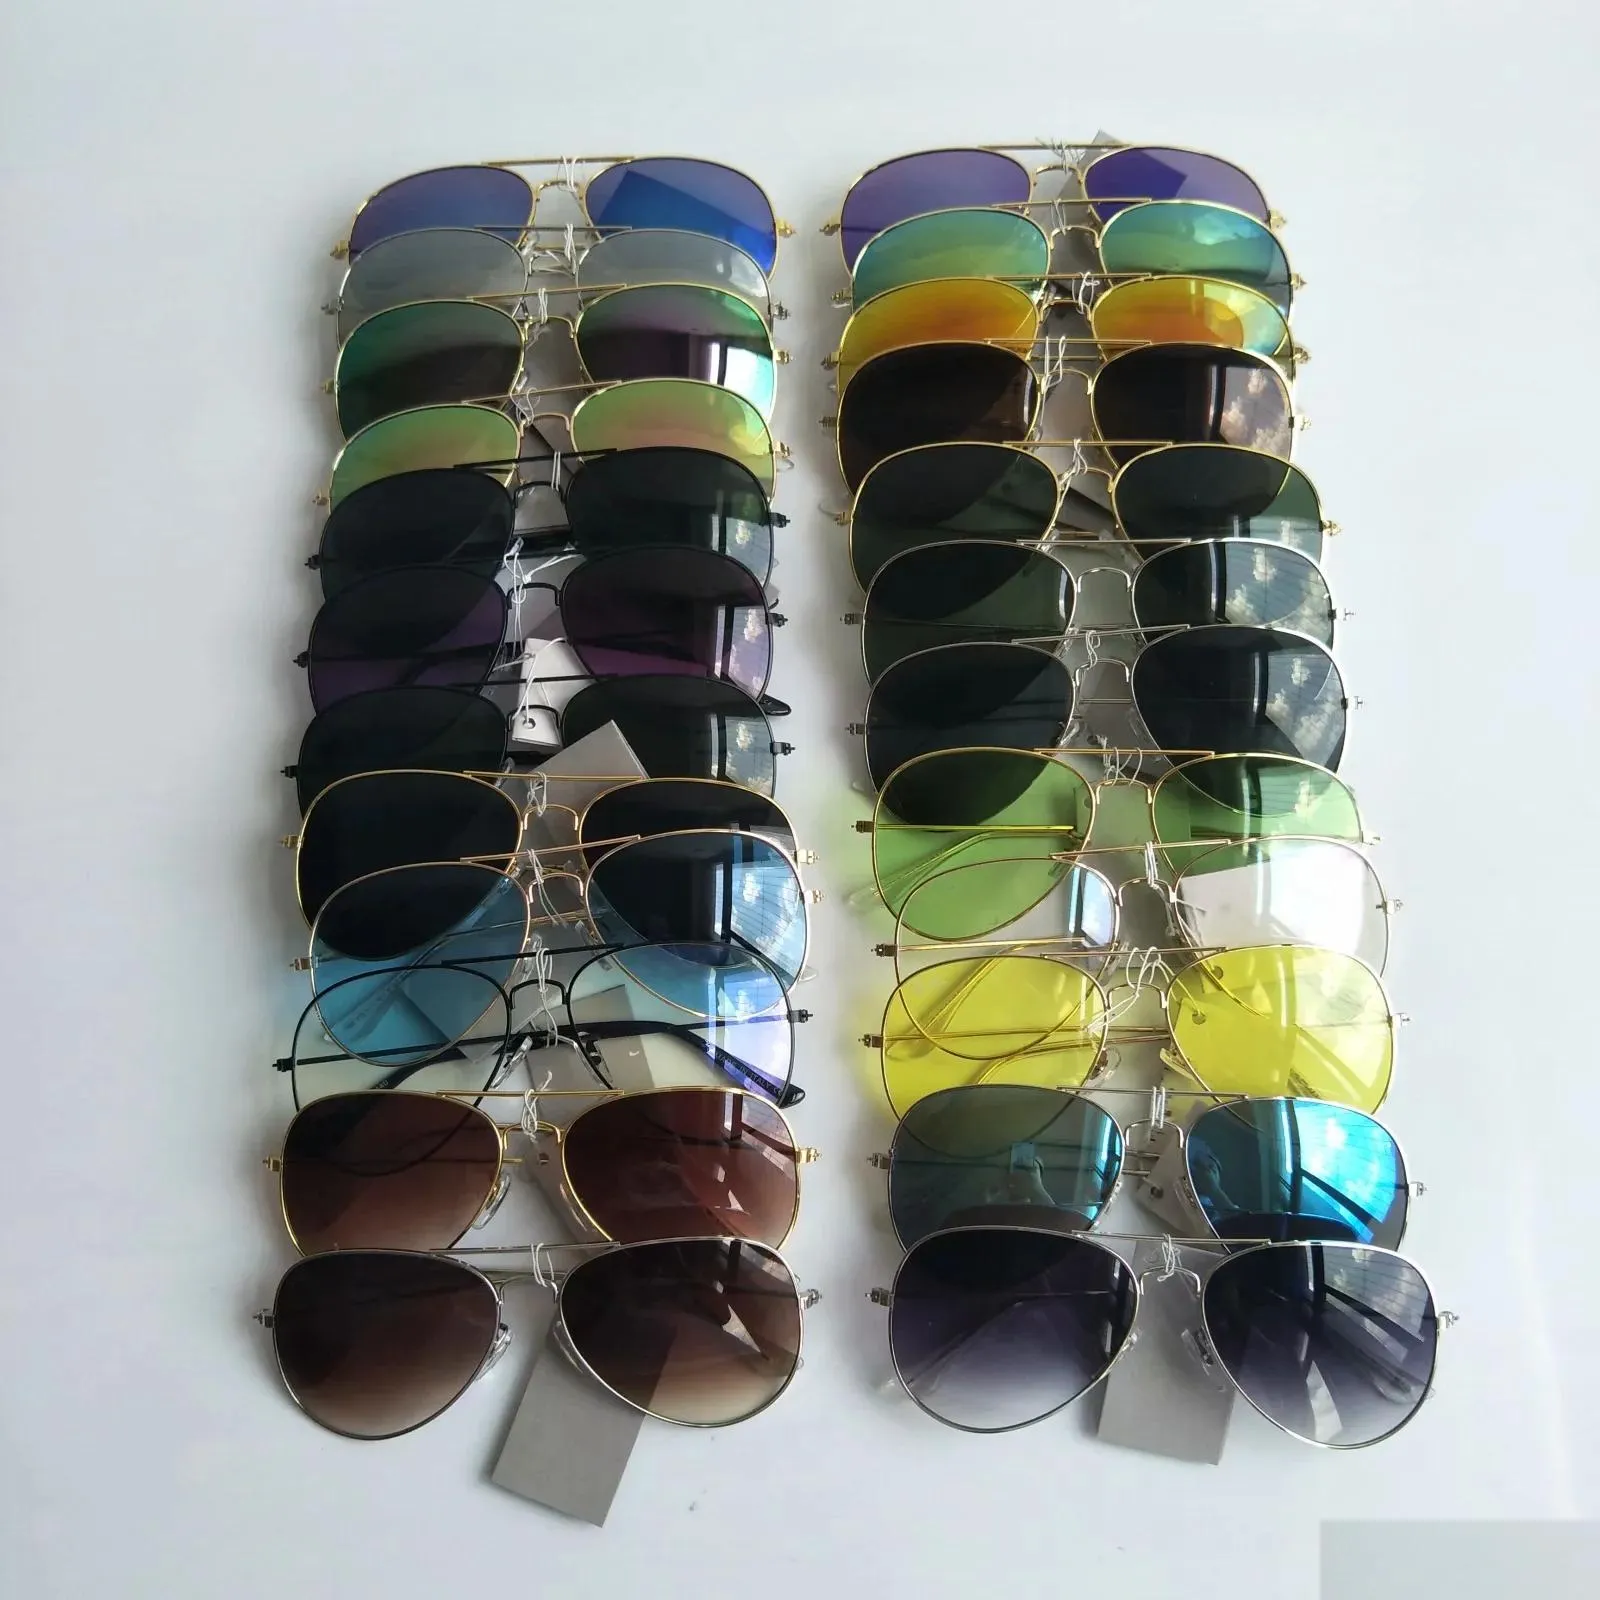 pilot classic women sunglasses metal frame resin men sun glasses eye protection uv400 brand eyewear wholesale 58mm 24 colors